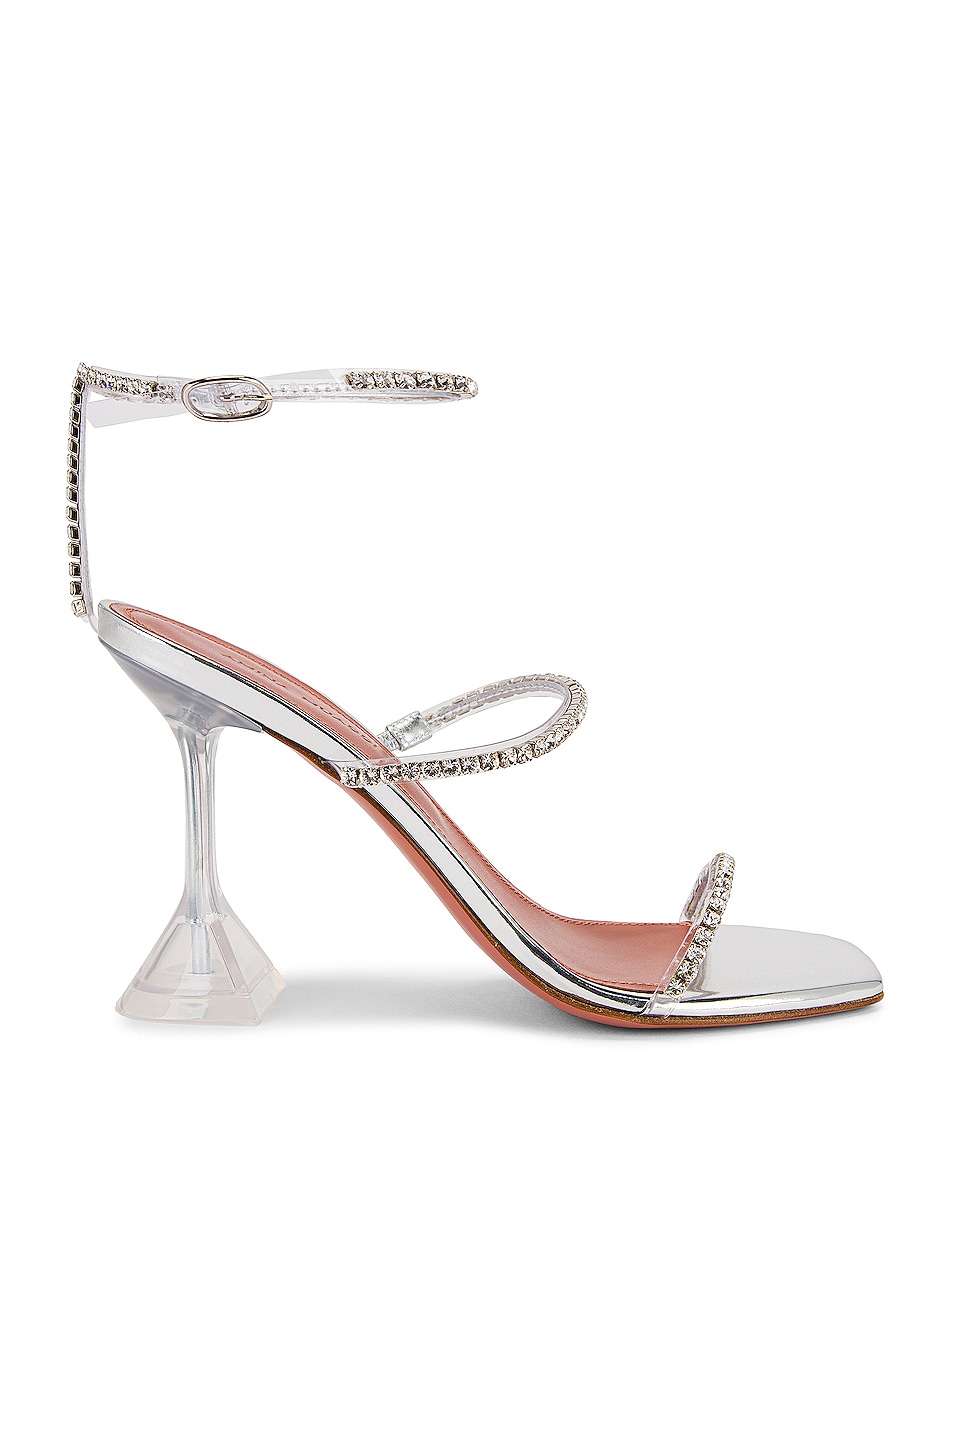 AMINA MUADDI Gilda Glass Sandal in Transparent & White Crystal | FWRD